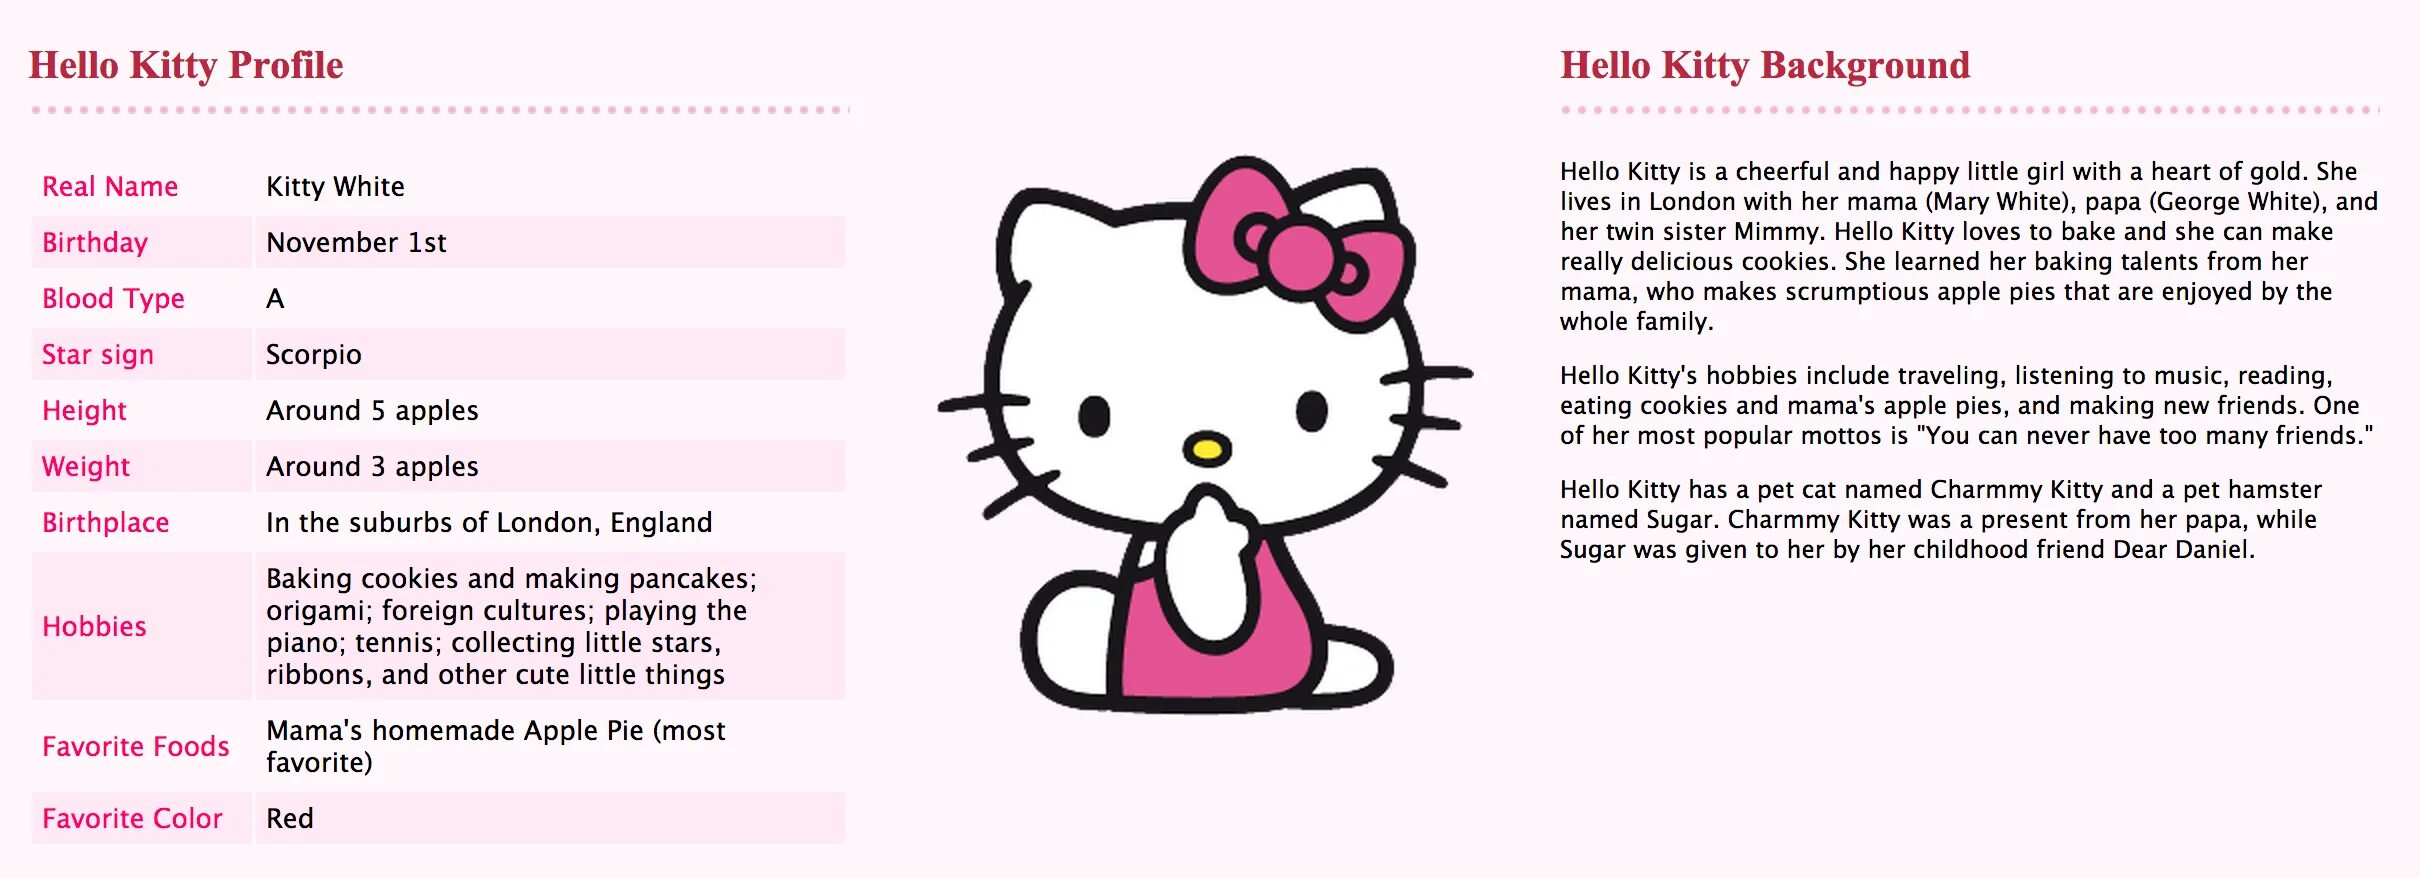 Хеллоу Китти имена. Hello Kitty персонажи с именами. Hello Kitty с описанием. Хеллоу Китти и друзья имена.